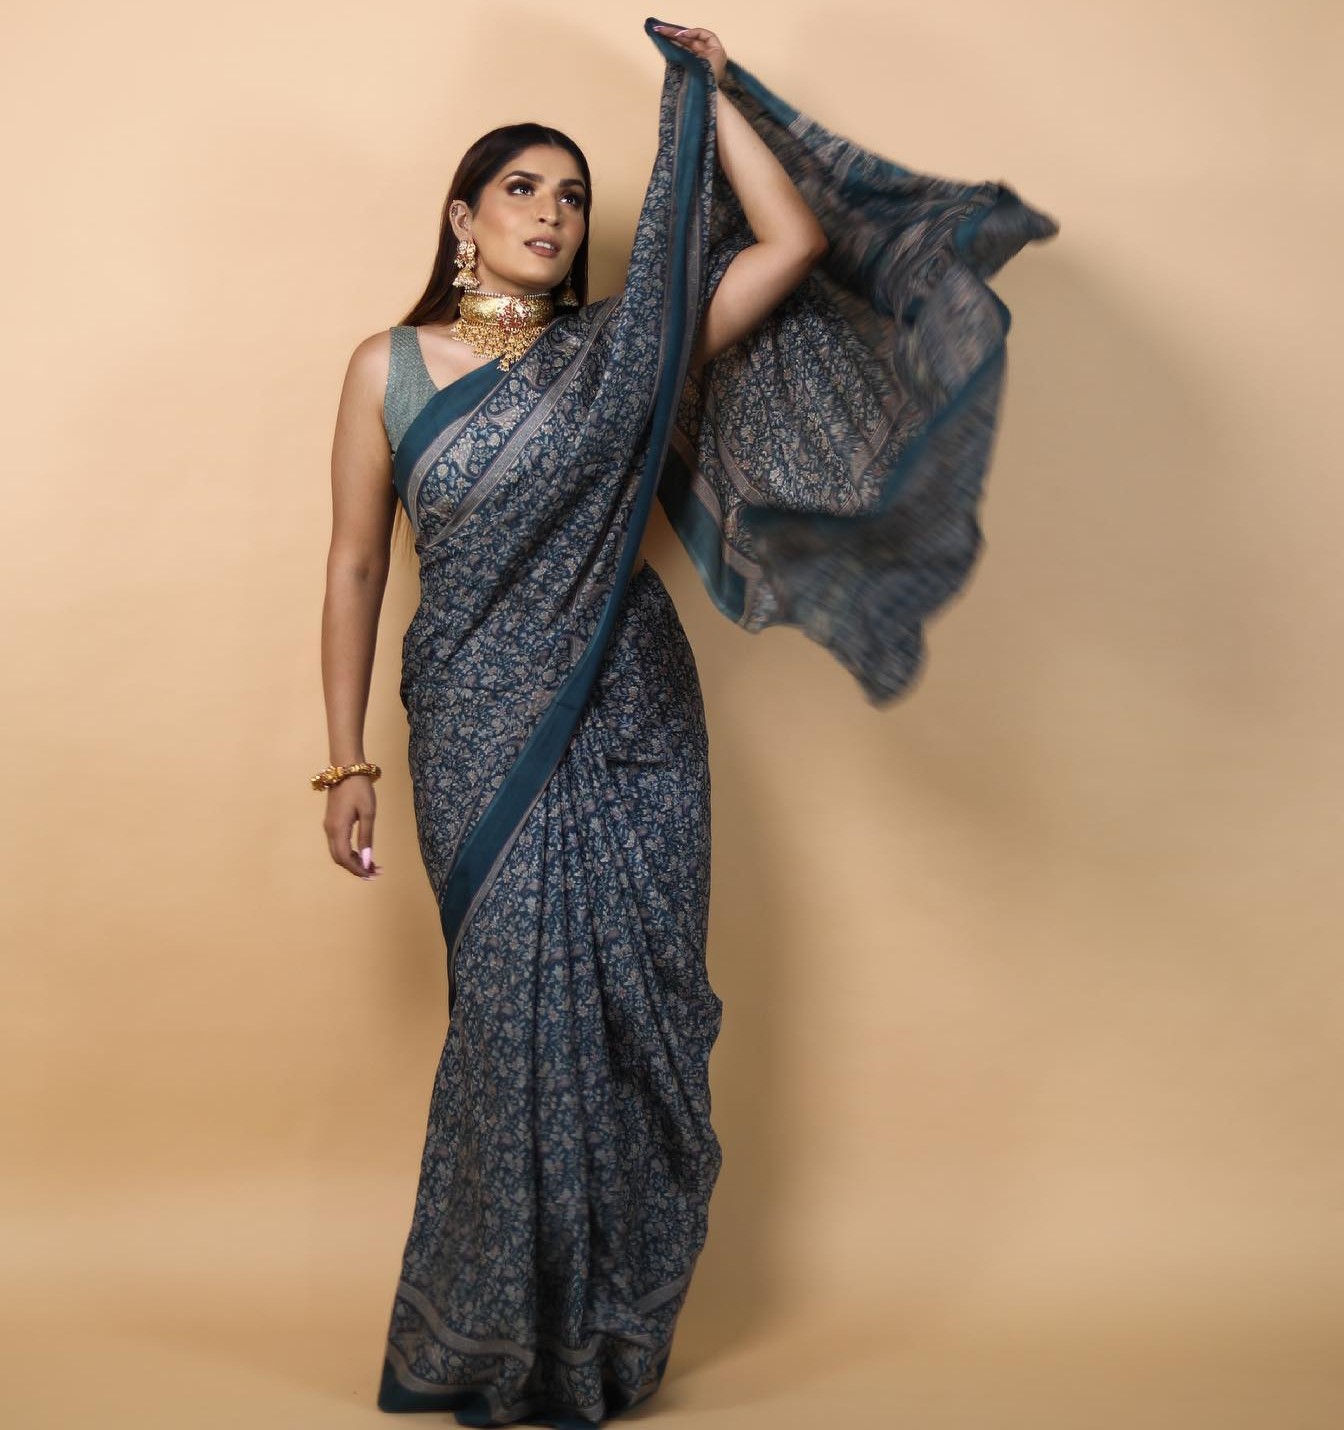 Fashion Influencer Shreya Jain In a Blue & Grey Printed Saree With Beautiful Chocker Neckpiece & Jhumkis